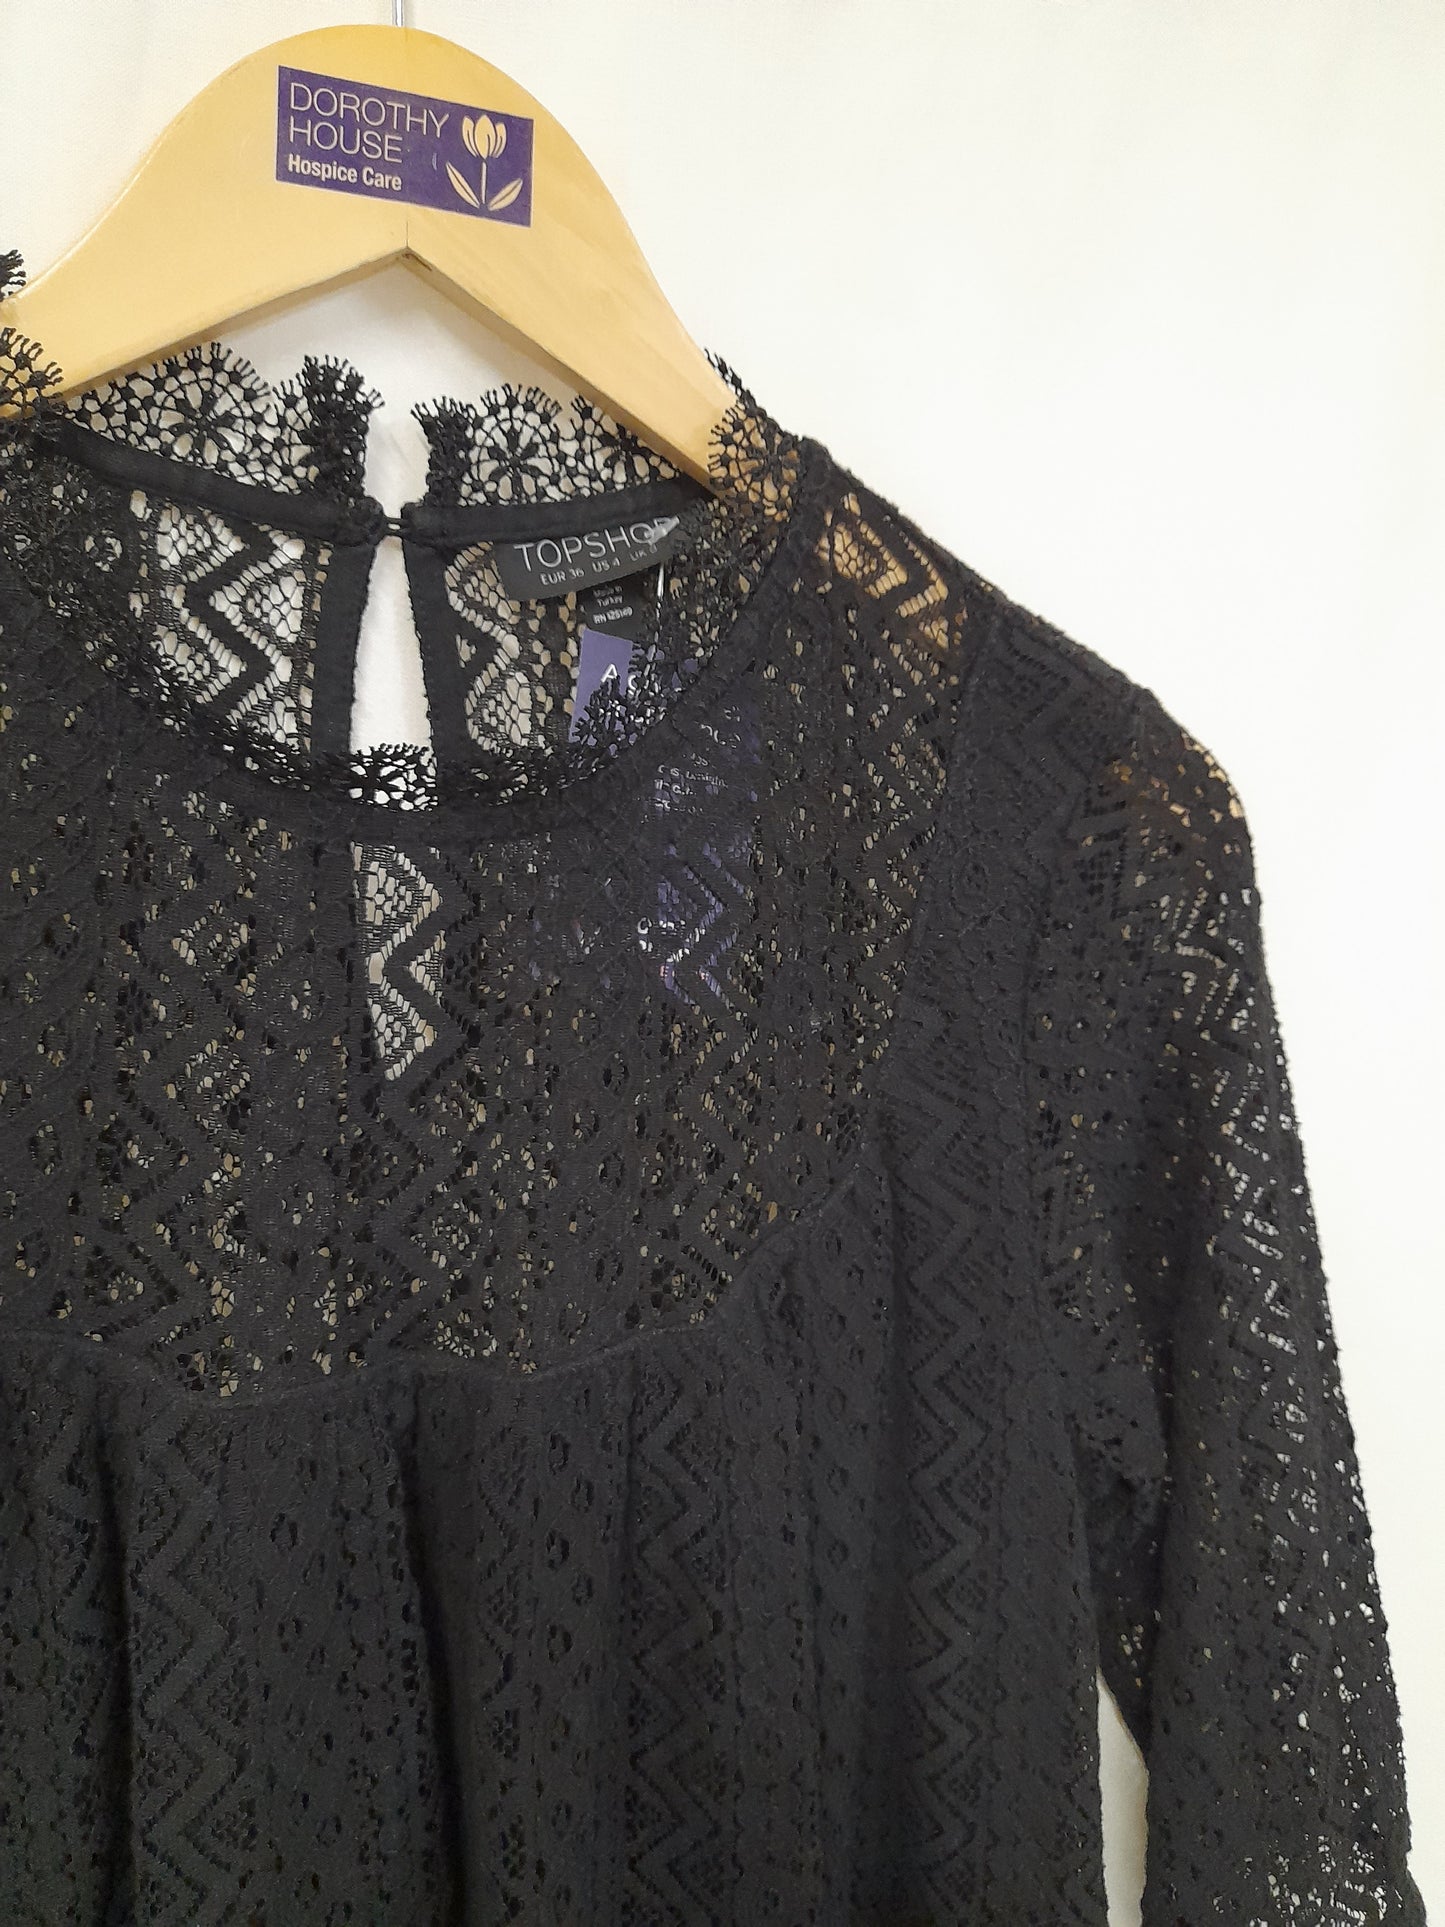 1960s Style Black Lace Overlay Mini Dress Size 8